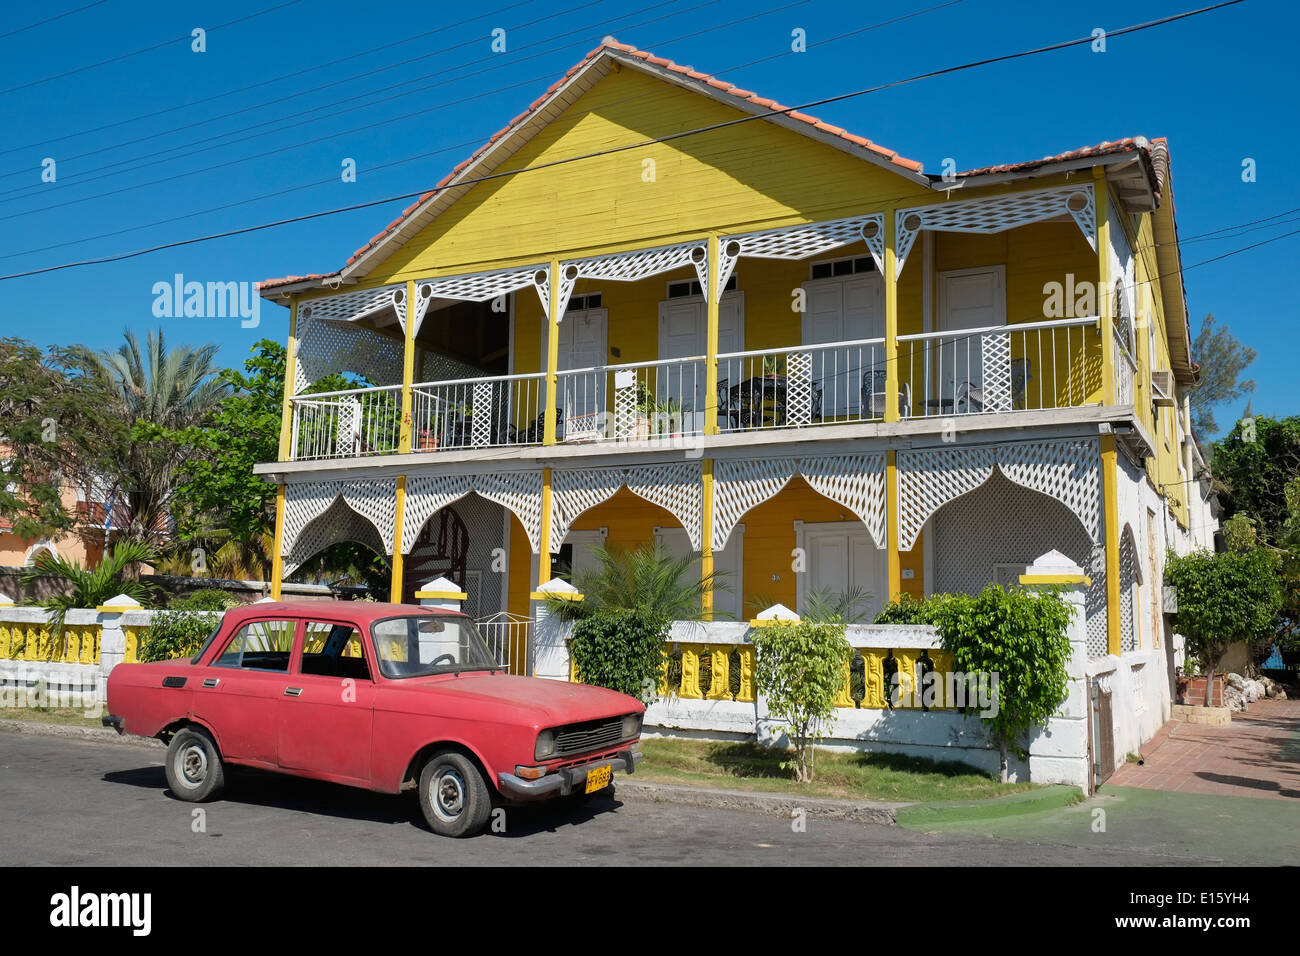 Une maison de style colonial sur la péninsule de Punta Gorda, Cienfuegos, Cuba. Banque D'Images